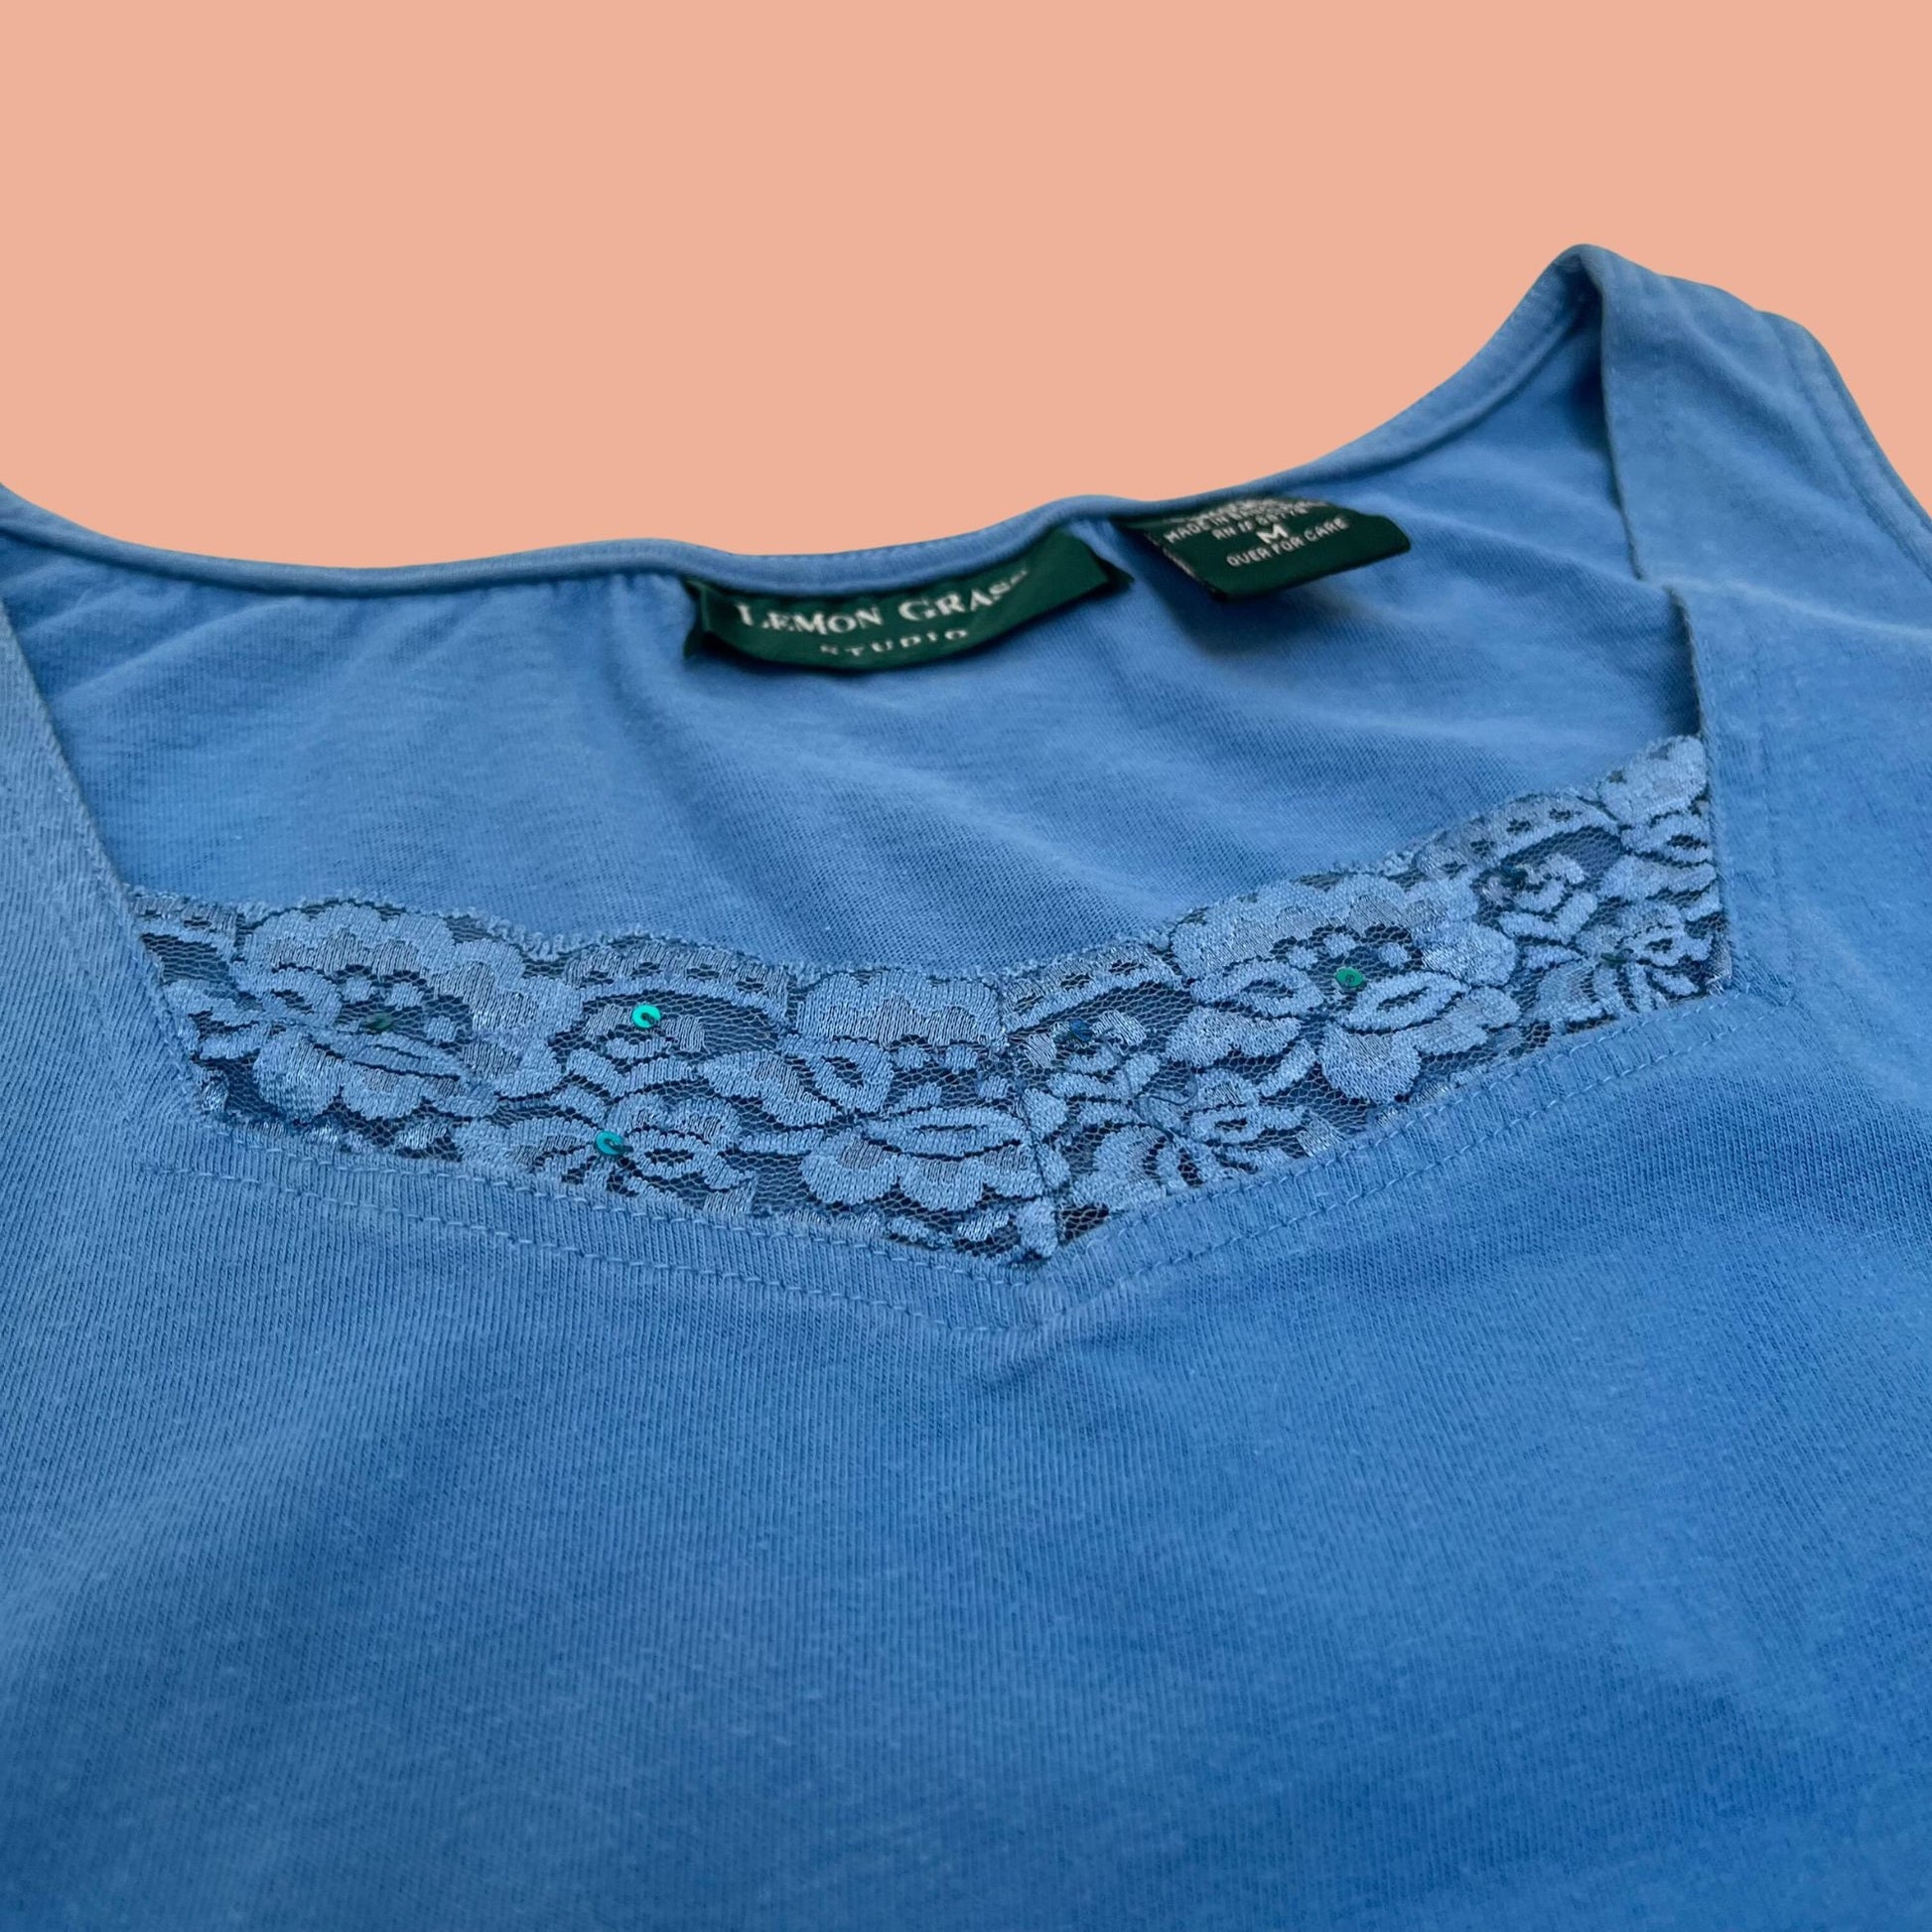 90s women's blue tank top with lace and sequins, vintage t shirt by Lemon Grass Studio, medium 1990s women's short sleeve shirt